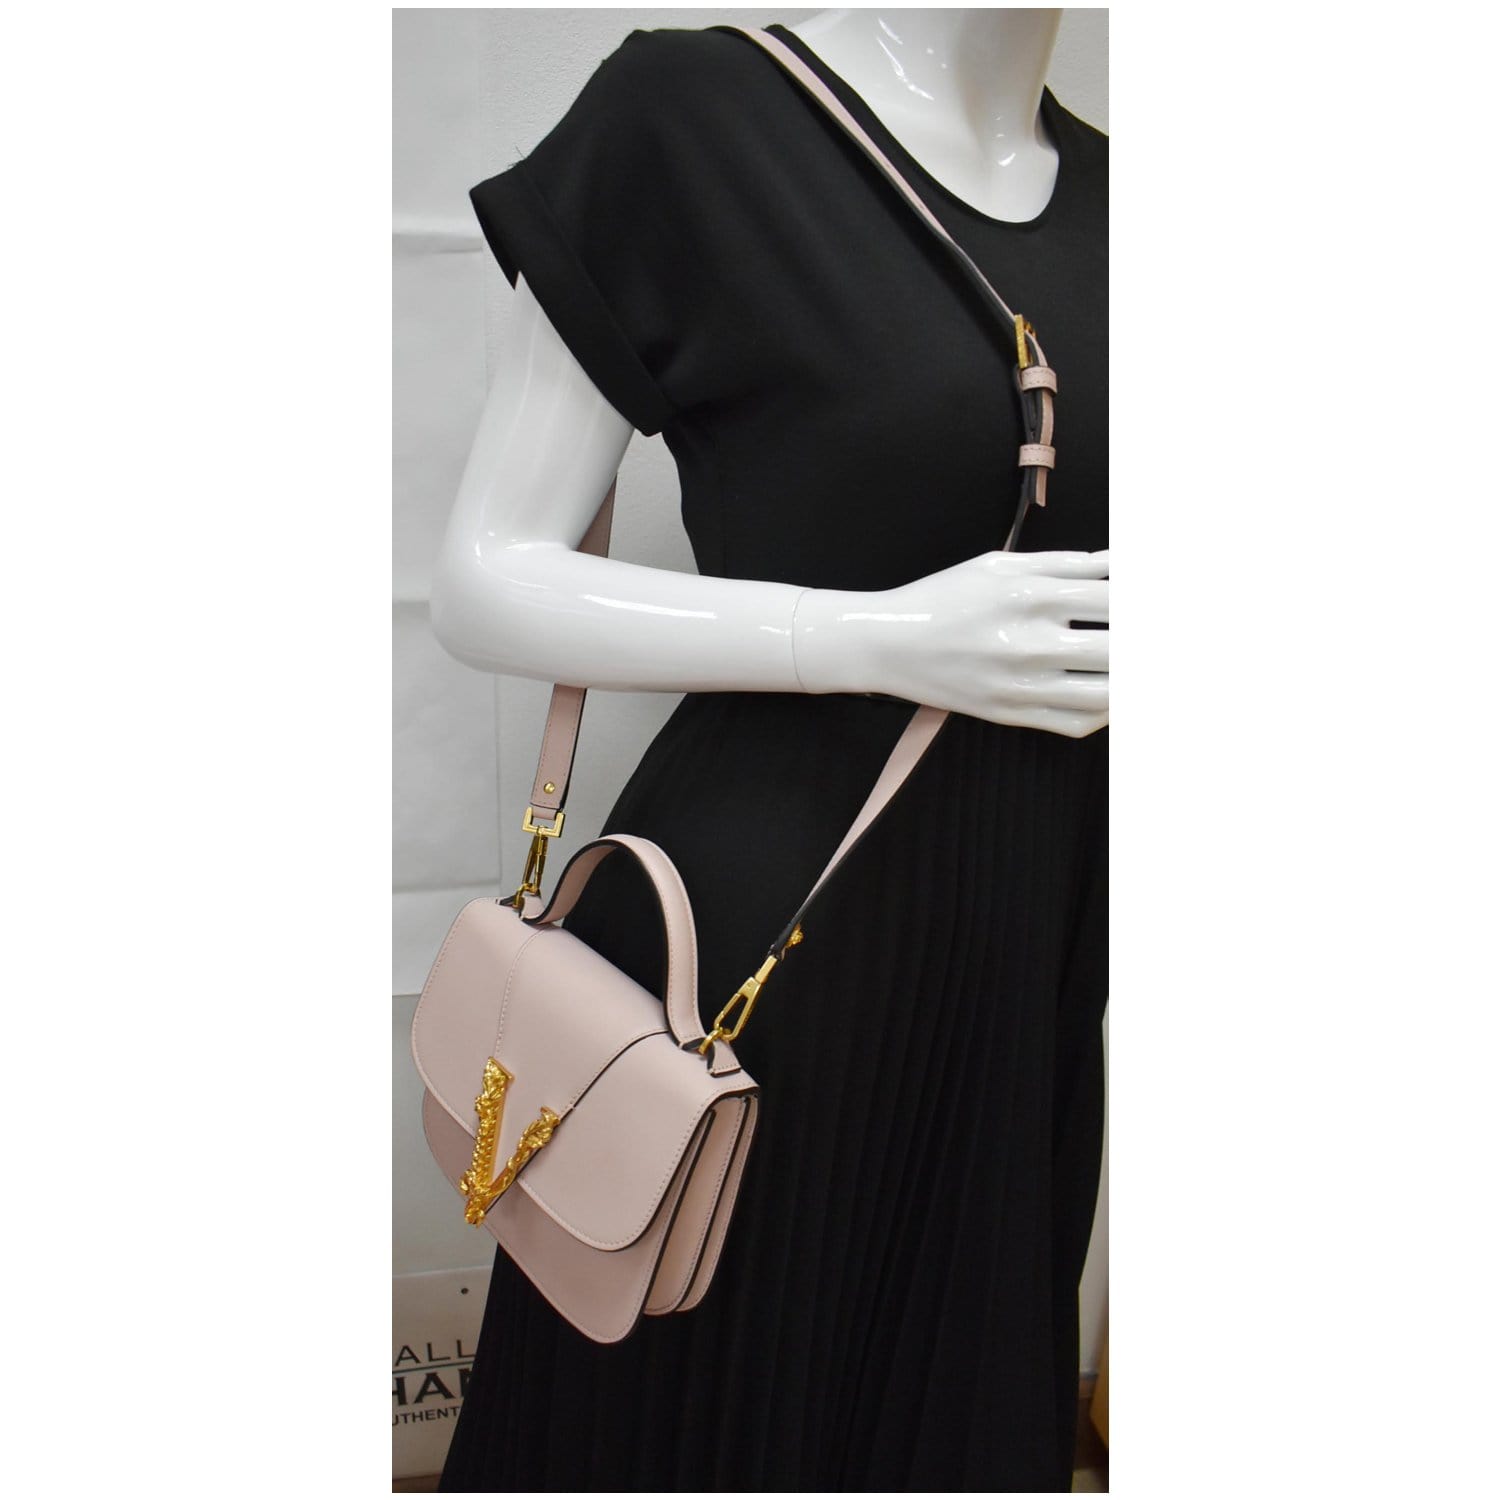 Virtus Mini Velvet Shoulder Bag in Pink - Versace